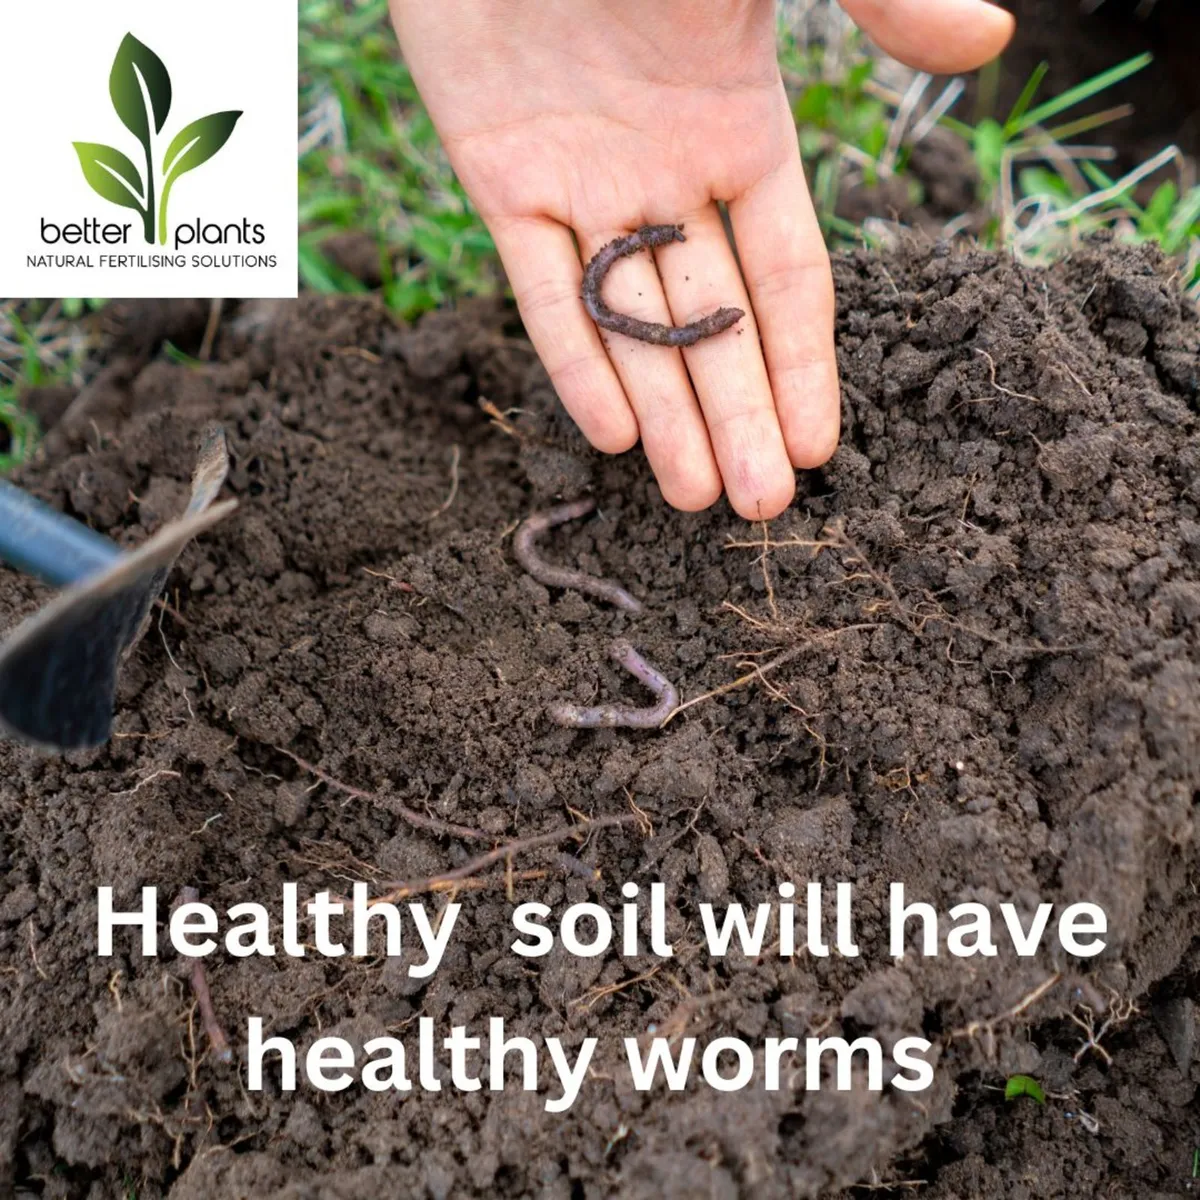 Improve soil fertility, structure & worms - Image 1